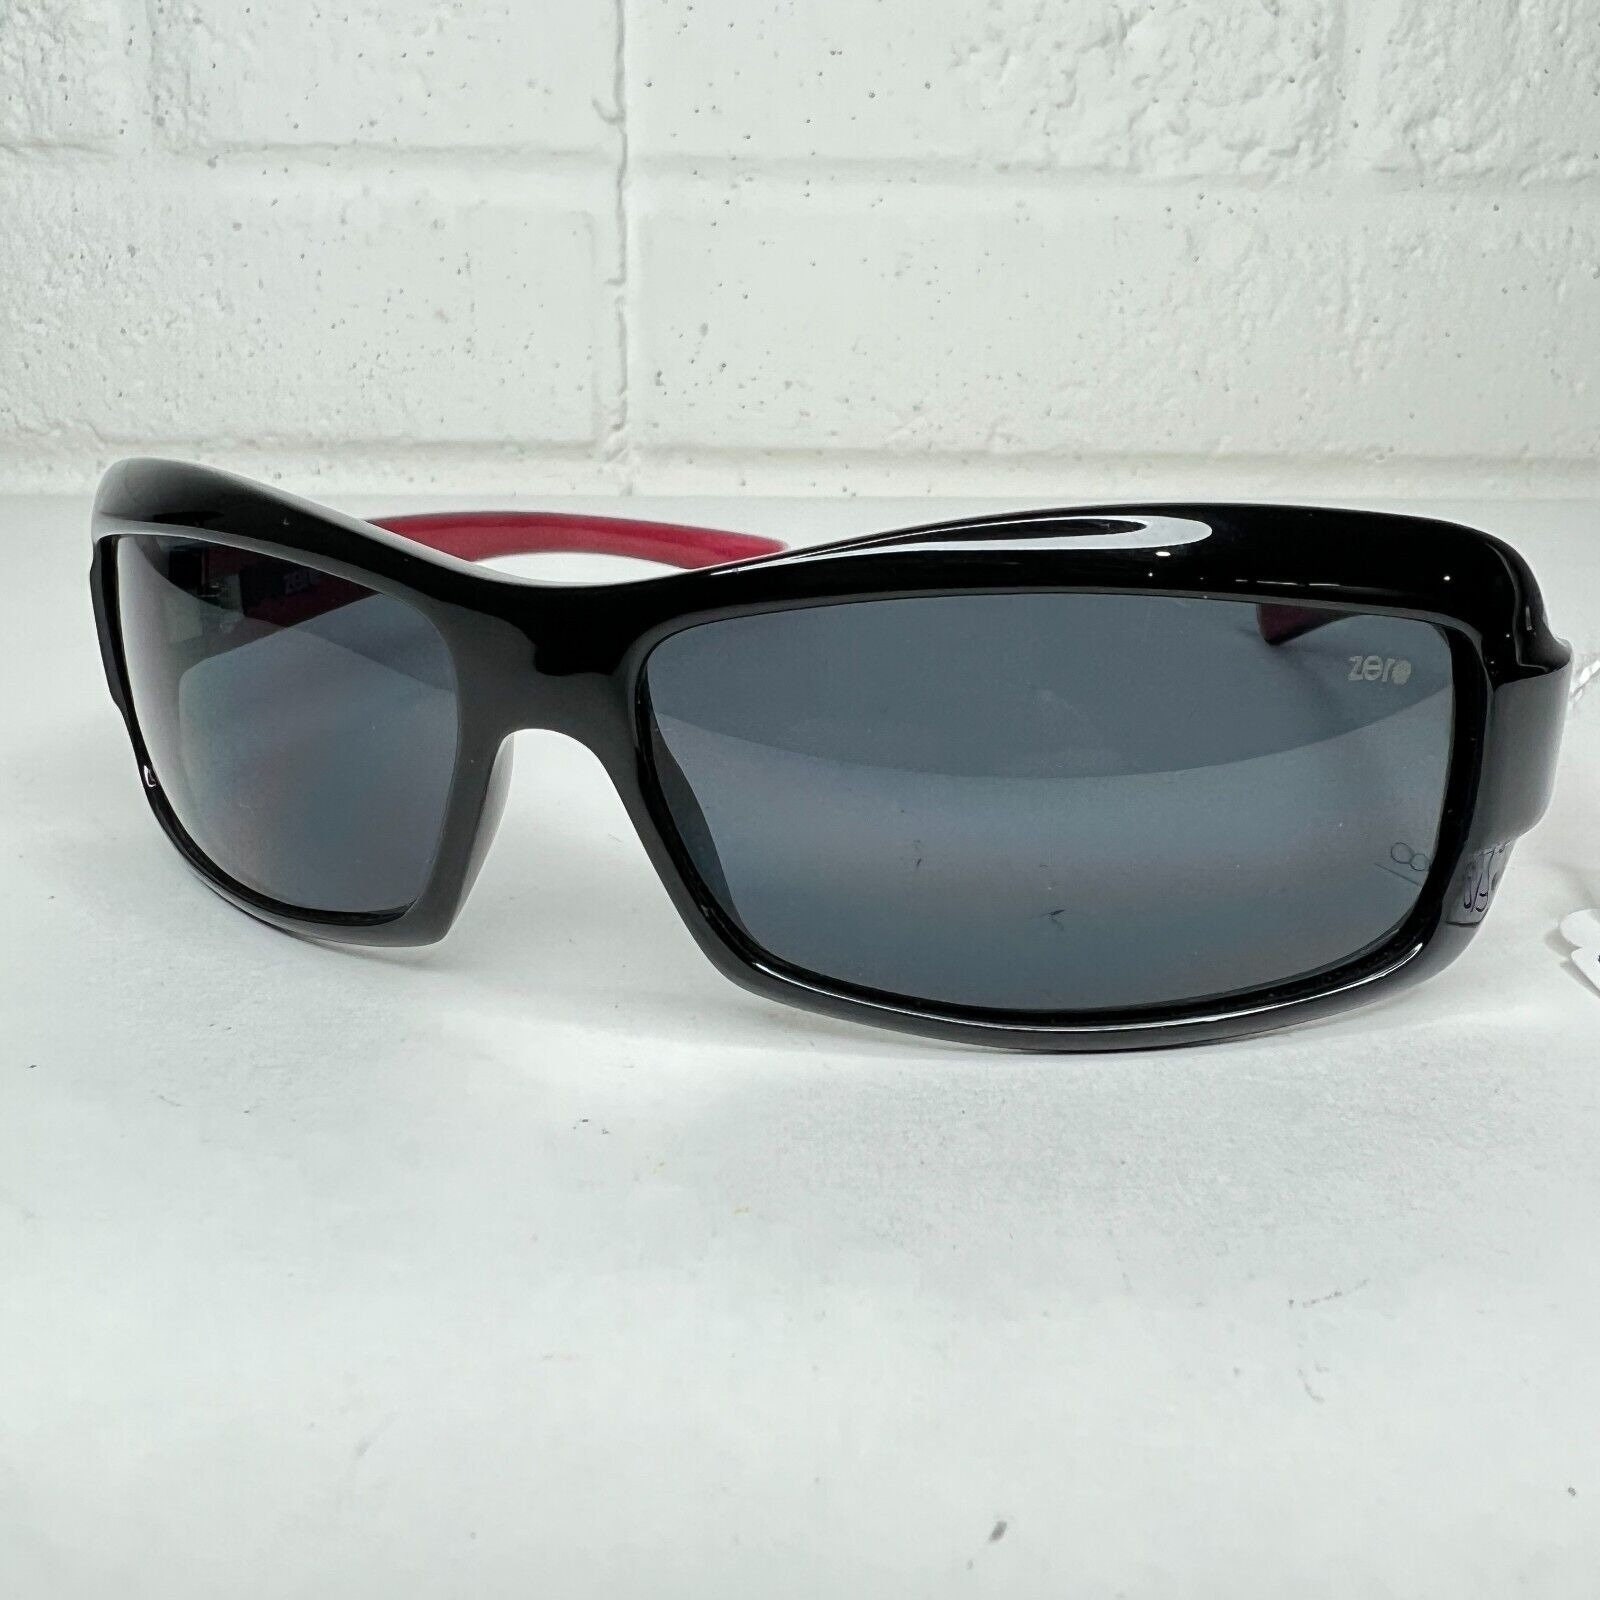 Buy JIM HALO Polarized Wrap Around Sunglasses for Men Women